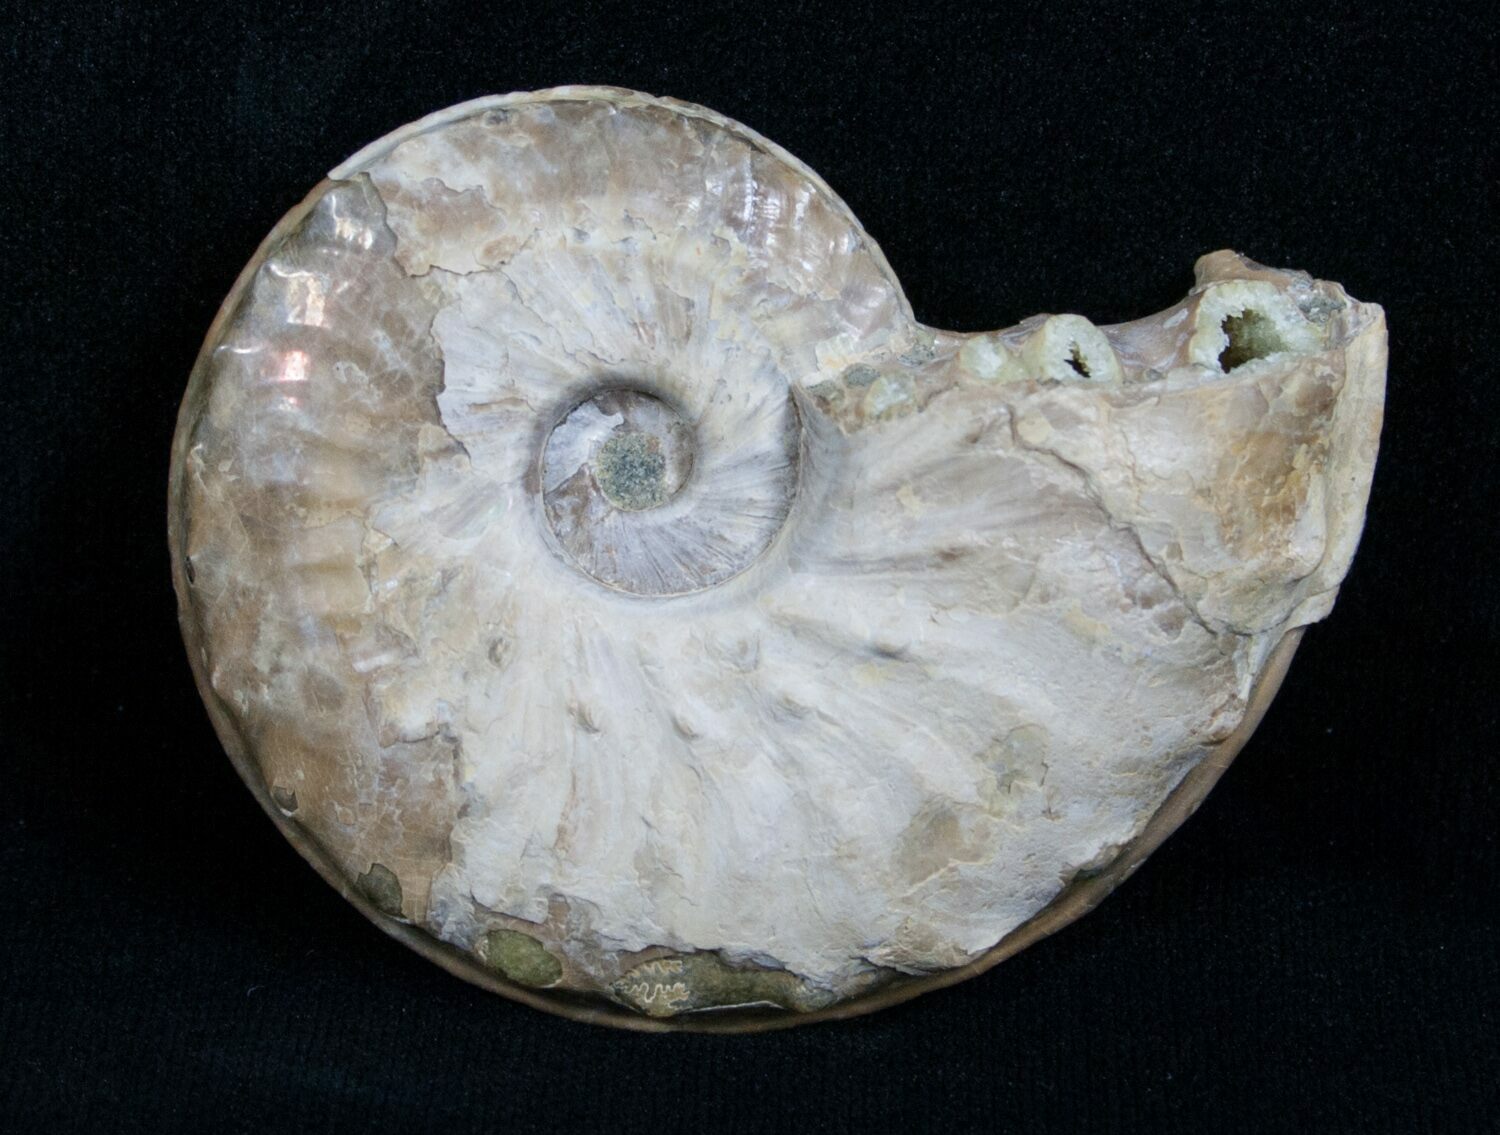 ammonite animal size